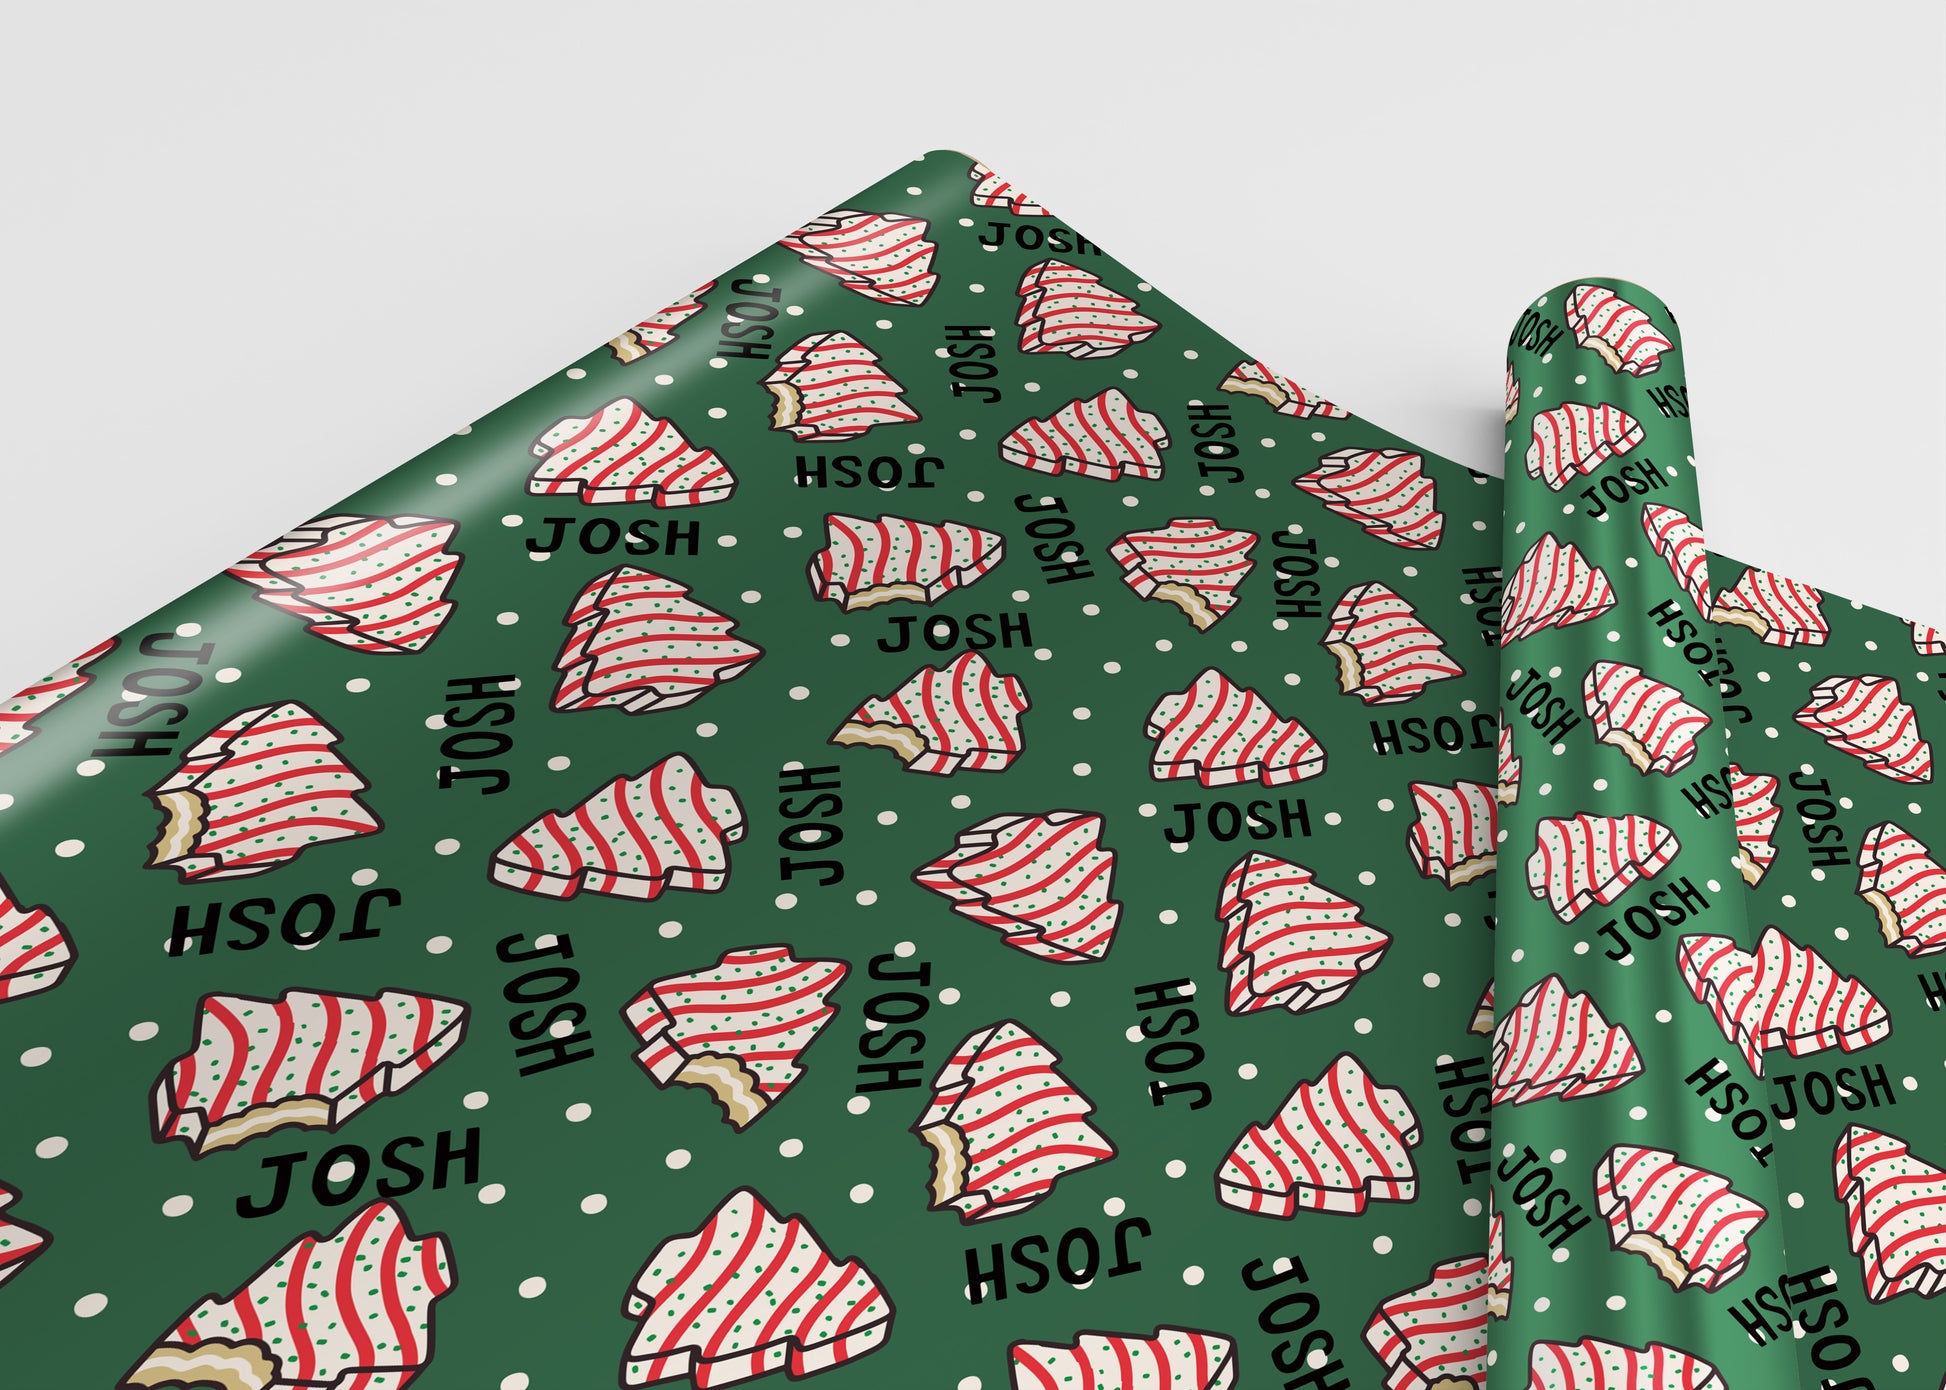 holiday inspired wrapping paper #style  การห่อของขวัญคริสตมาส, คริสต์มาส  diy, การตกแต่งเทศกาลคริสต์มาส